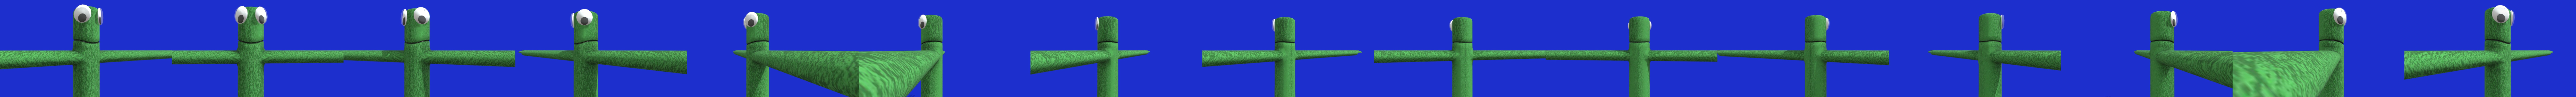 Rainbow Friends Green - Download Free 3D model by Maxtoblenter [ec157e5] -  Sketchfab